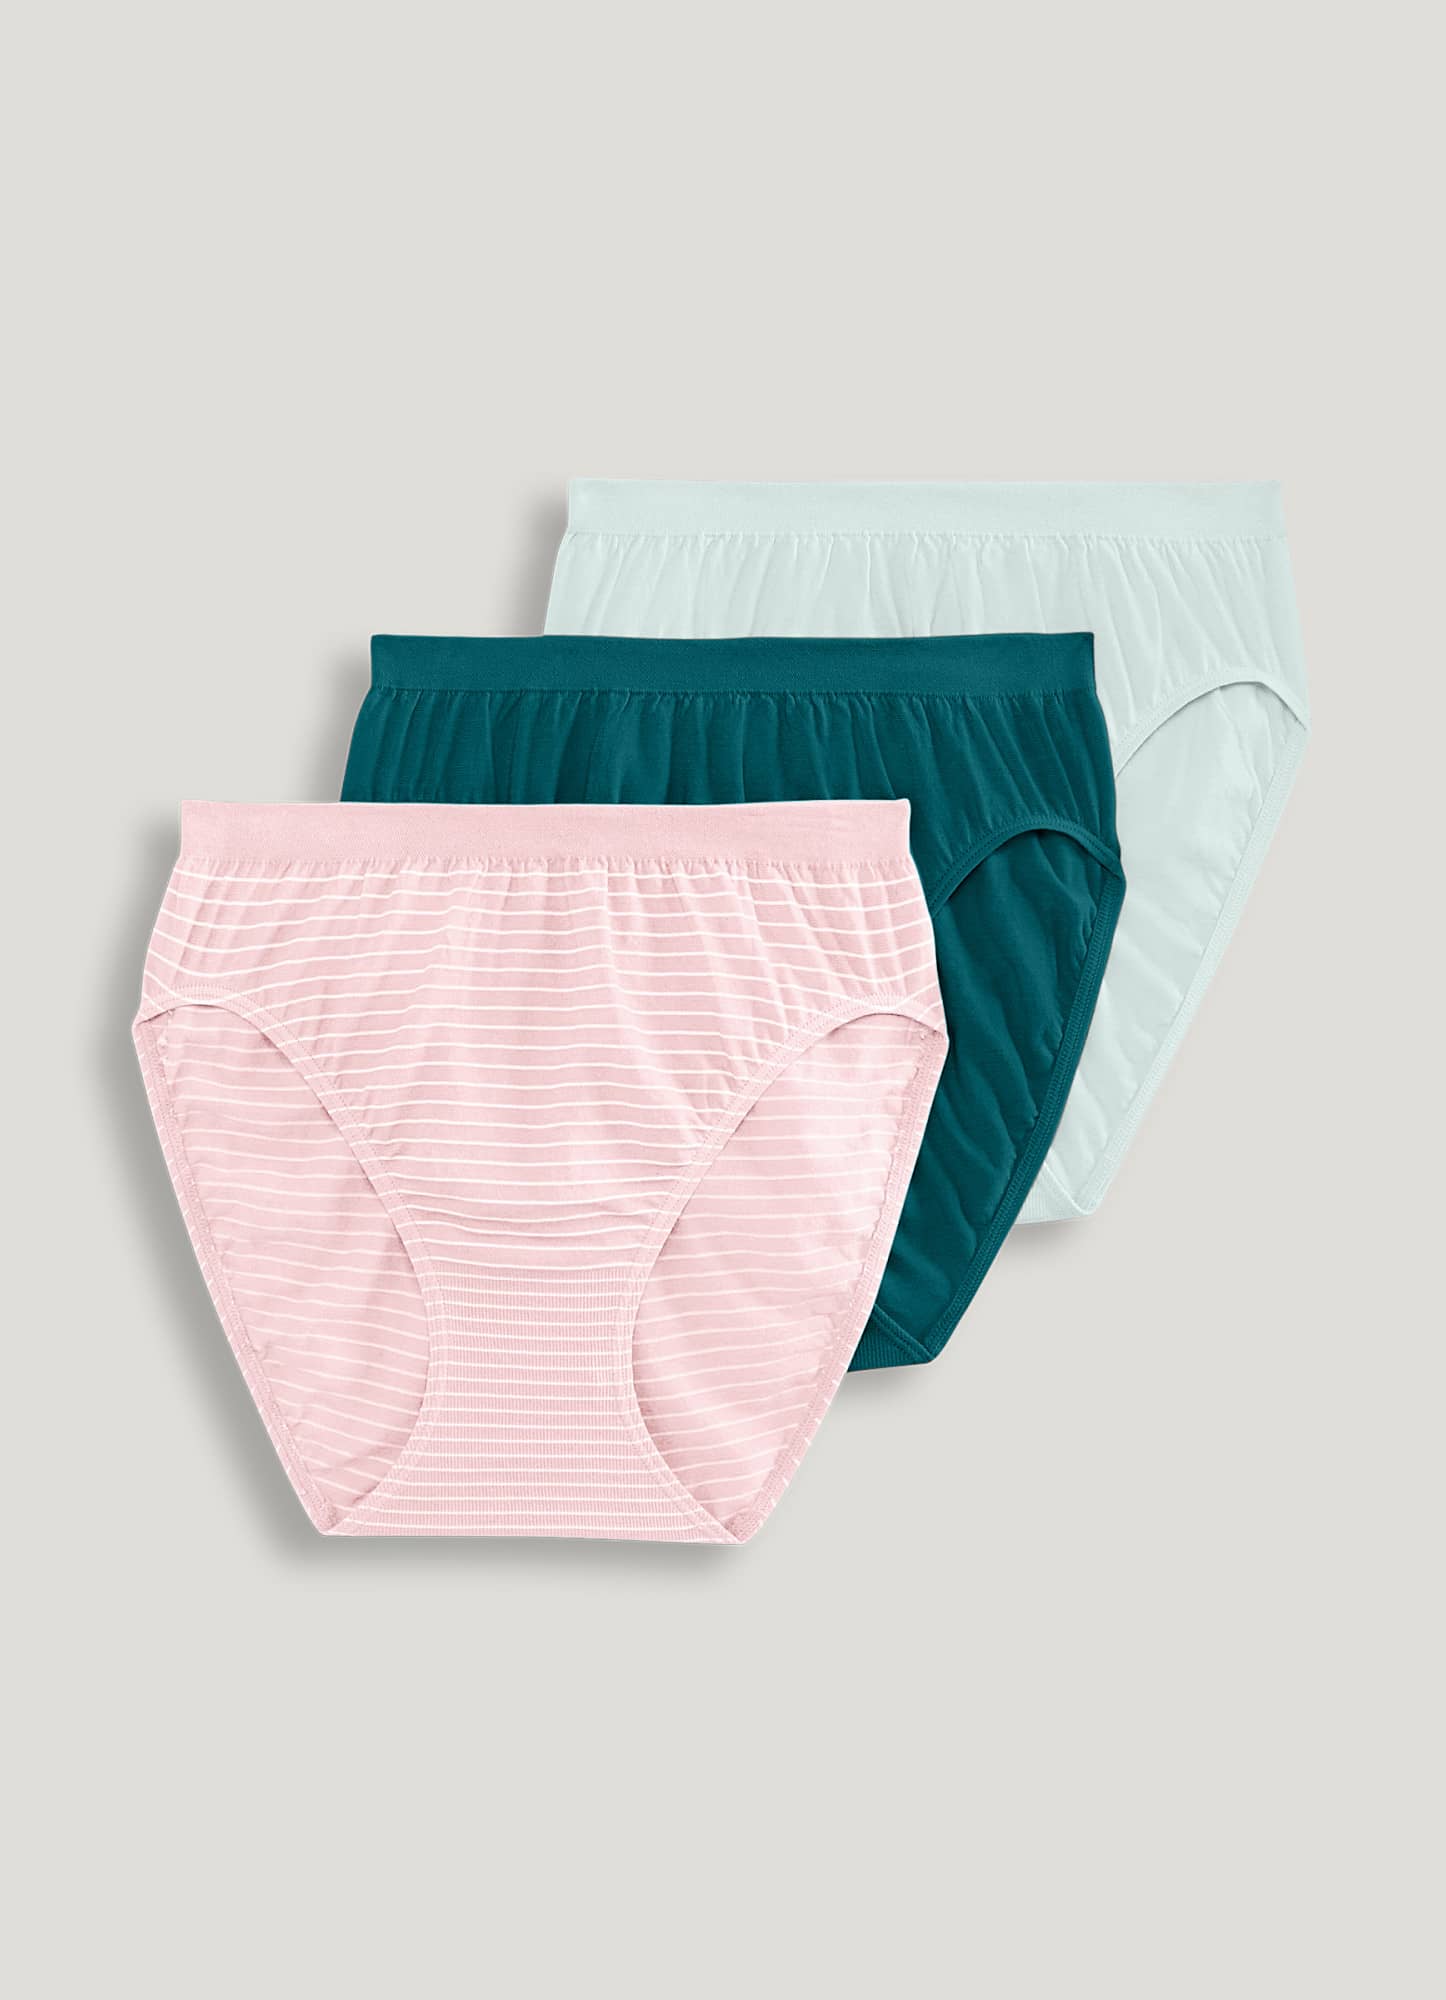 Jockey, Intimates & Sleepwear, Jockey Breathe Comfort Panty 3 Pack